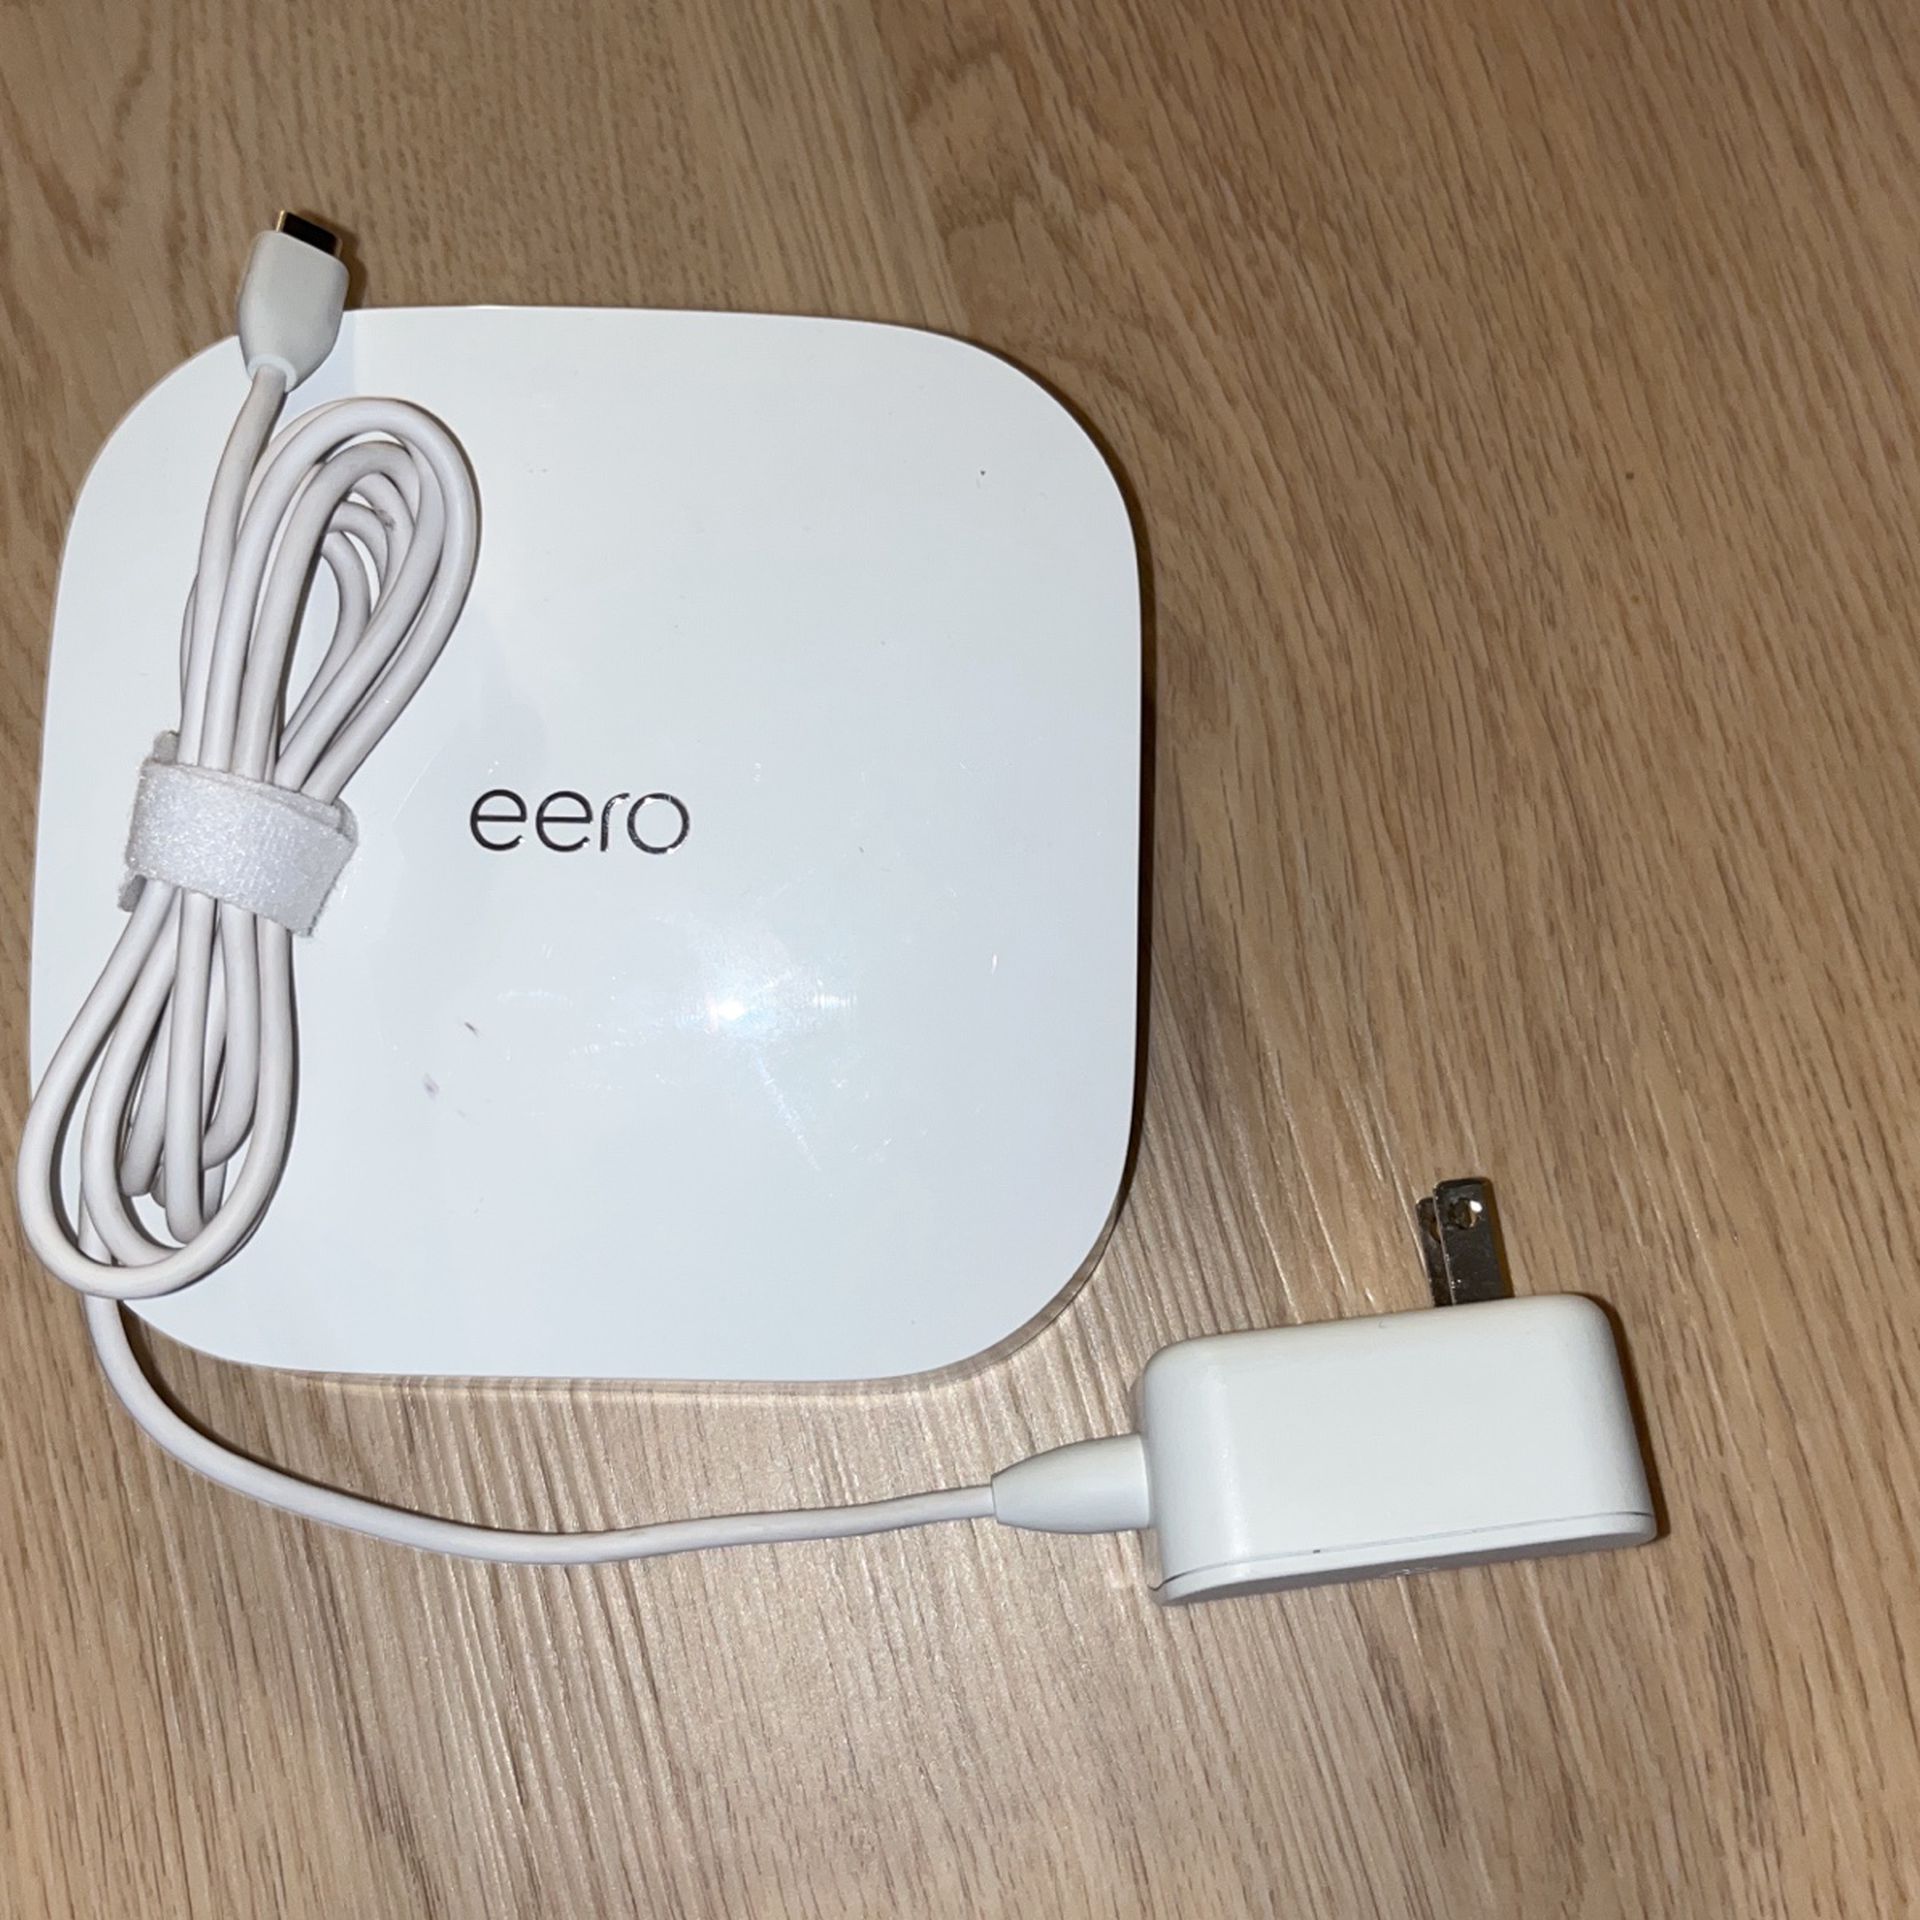 Eero Pro 6 Mesh Wireless WiFi Routers (2)